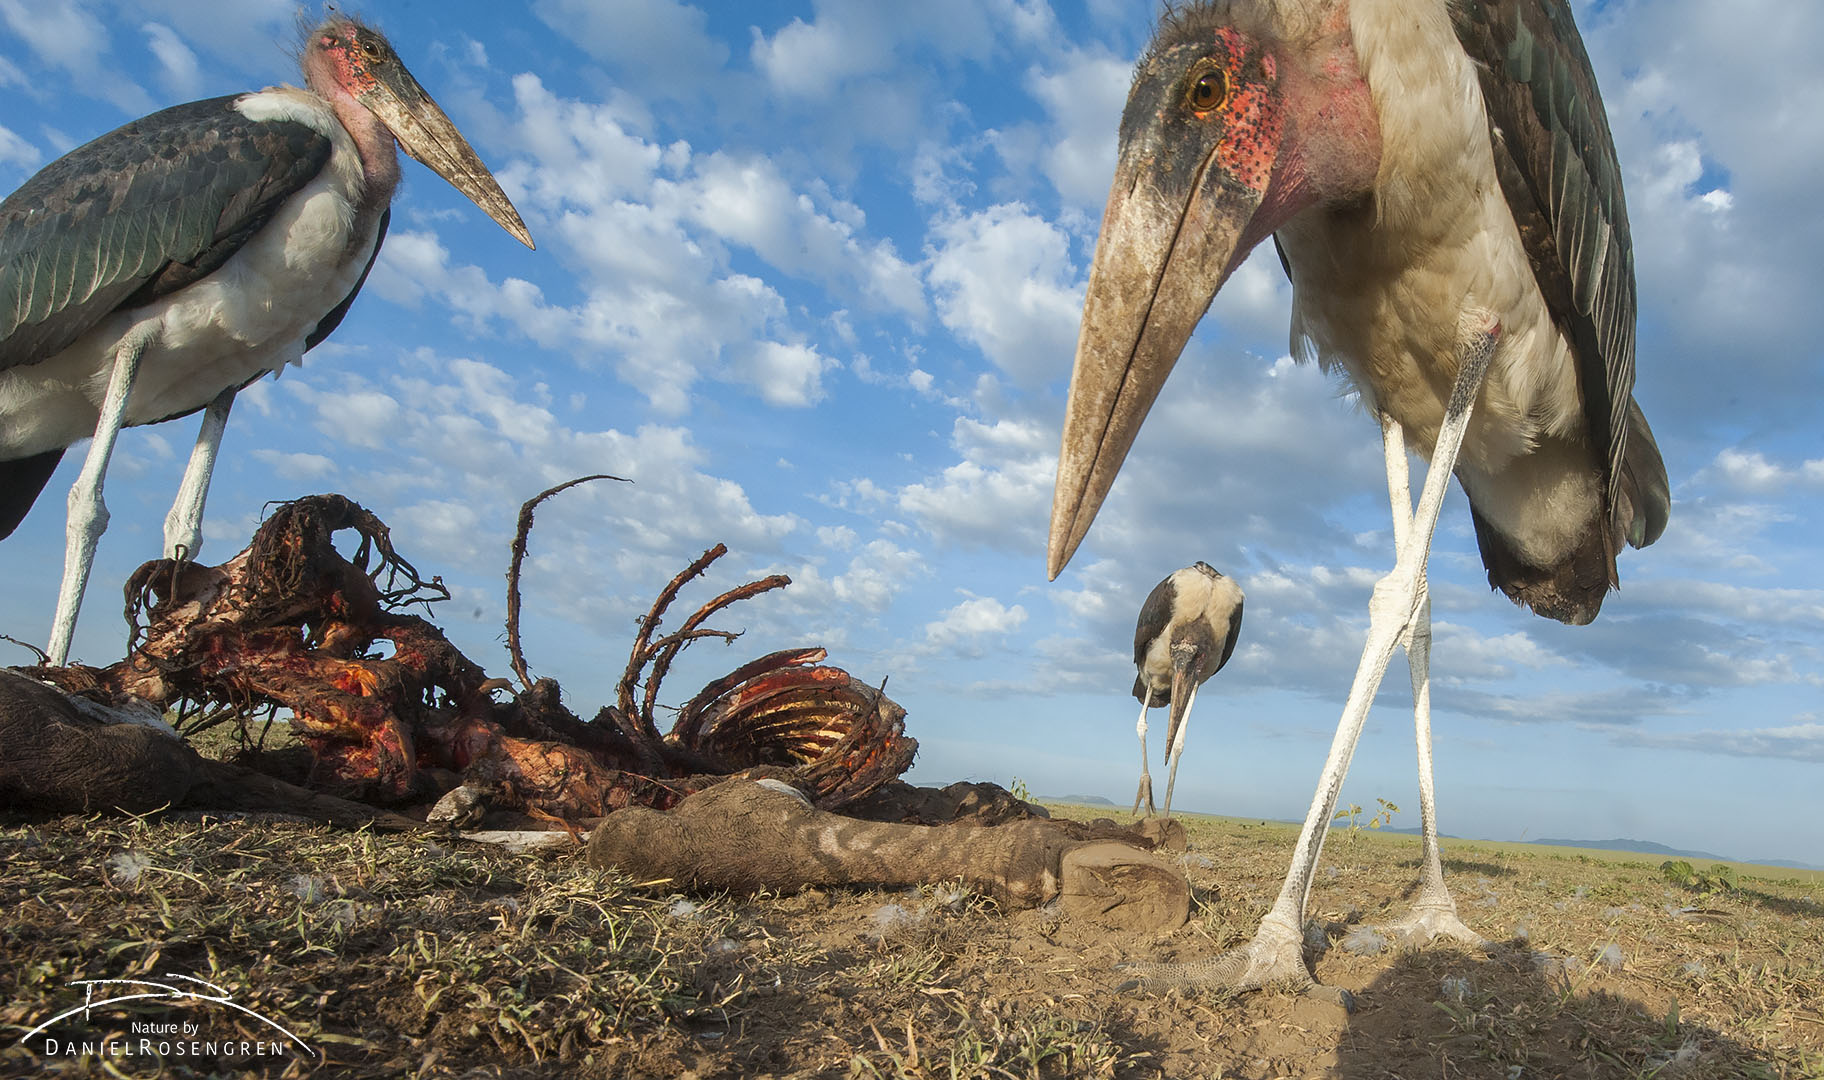 A Marabou stork towering over the camera. © Daniel Rosengren